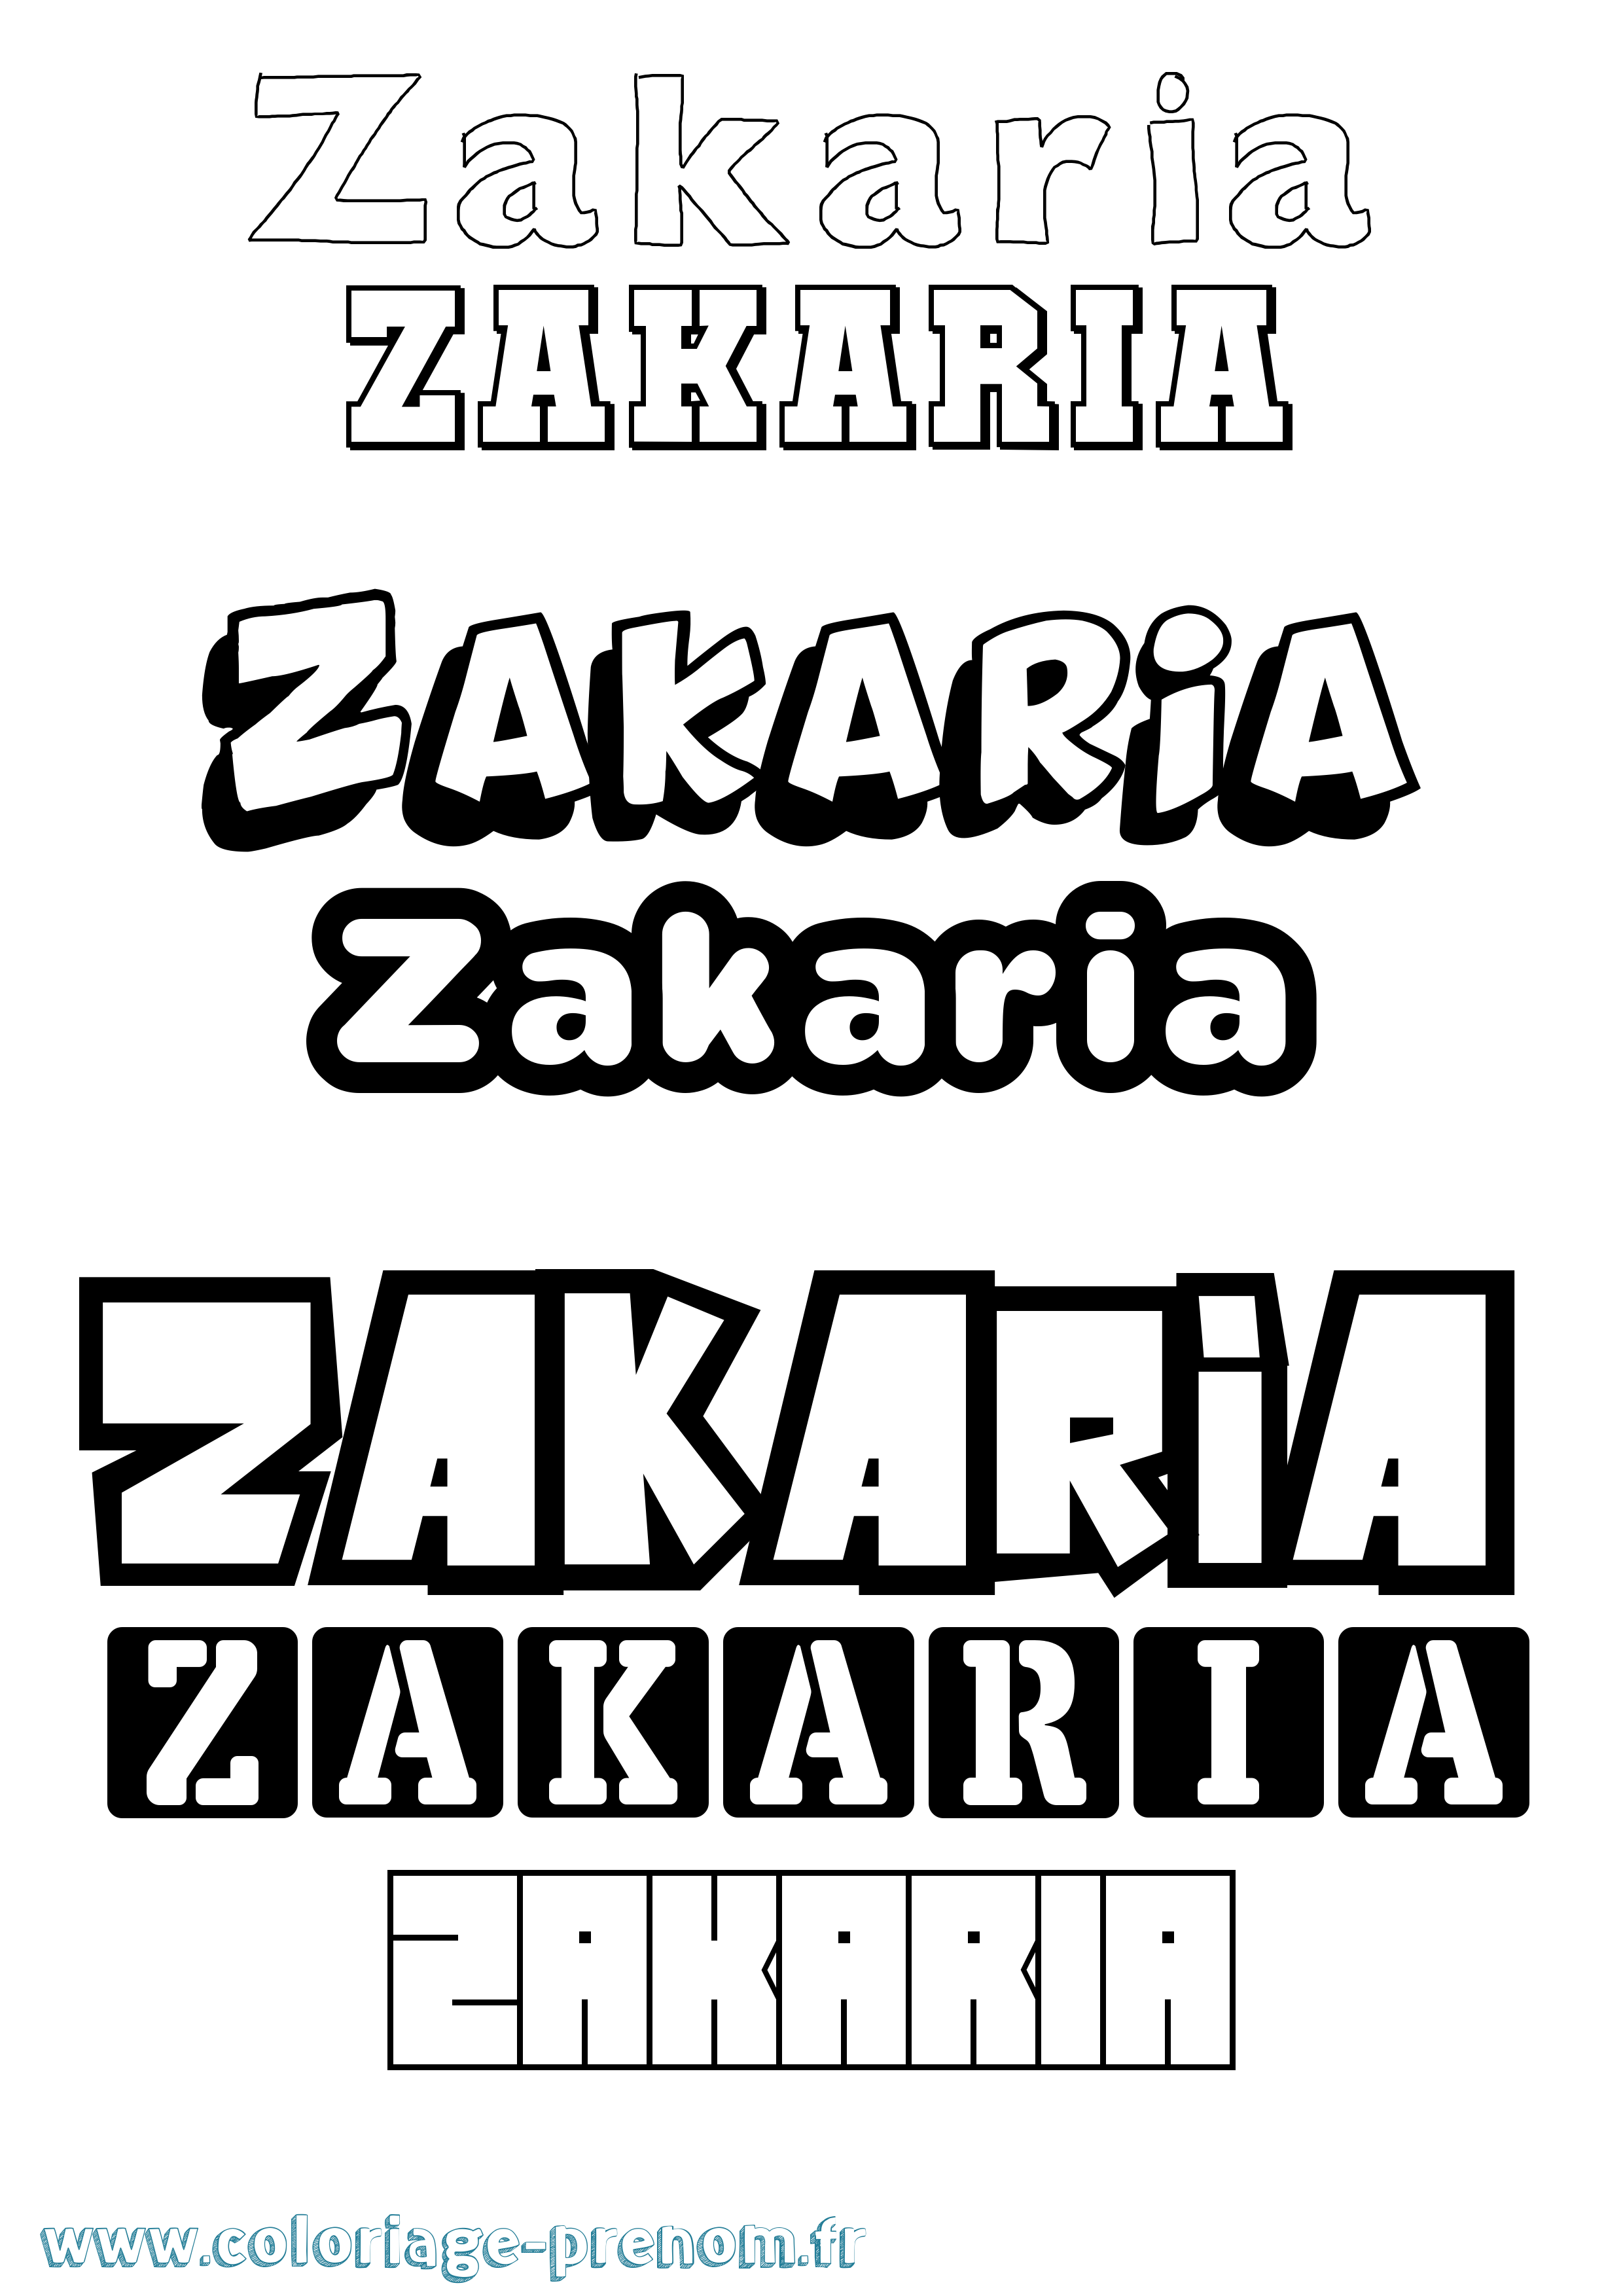 Coloriage prénom Zakaria Simple